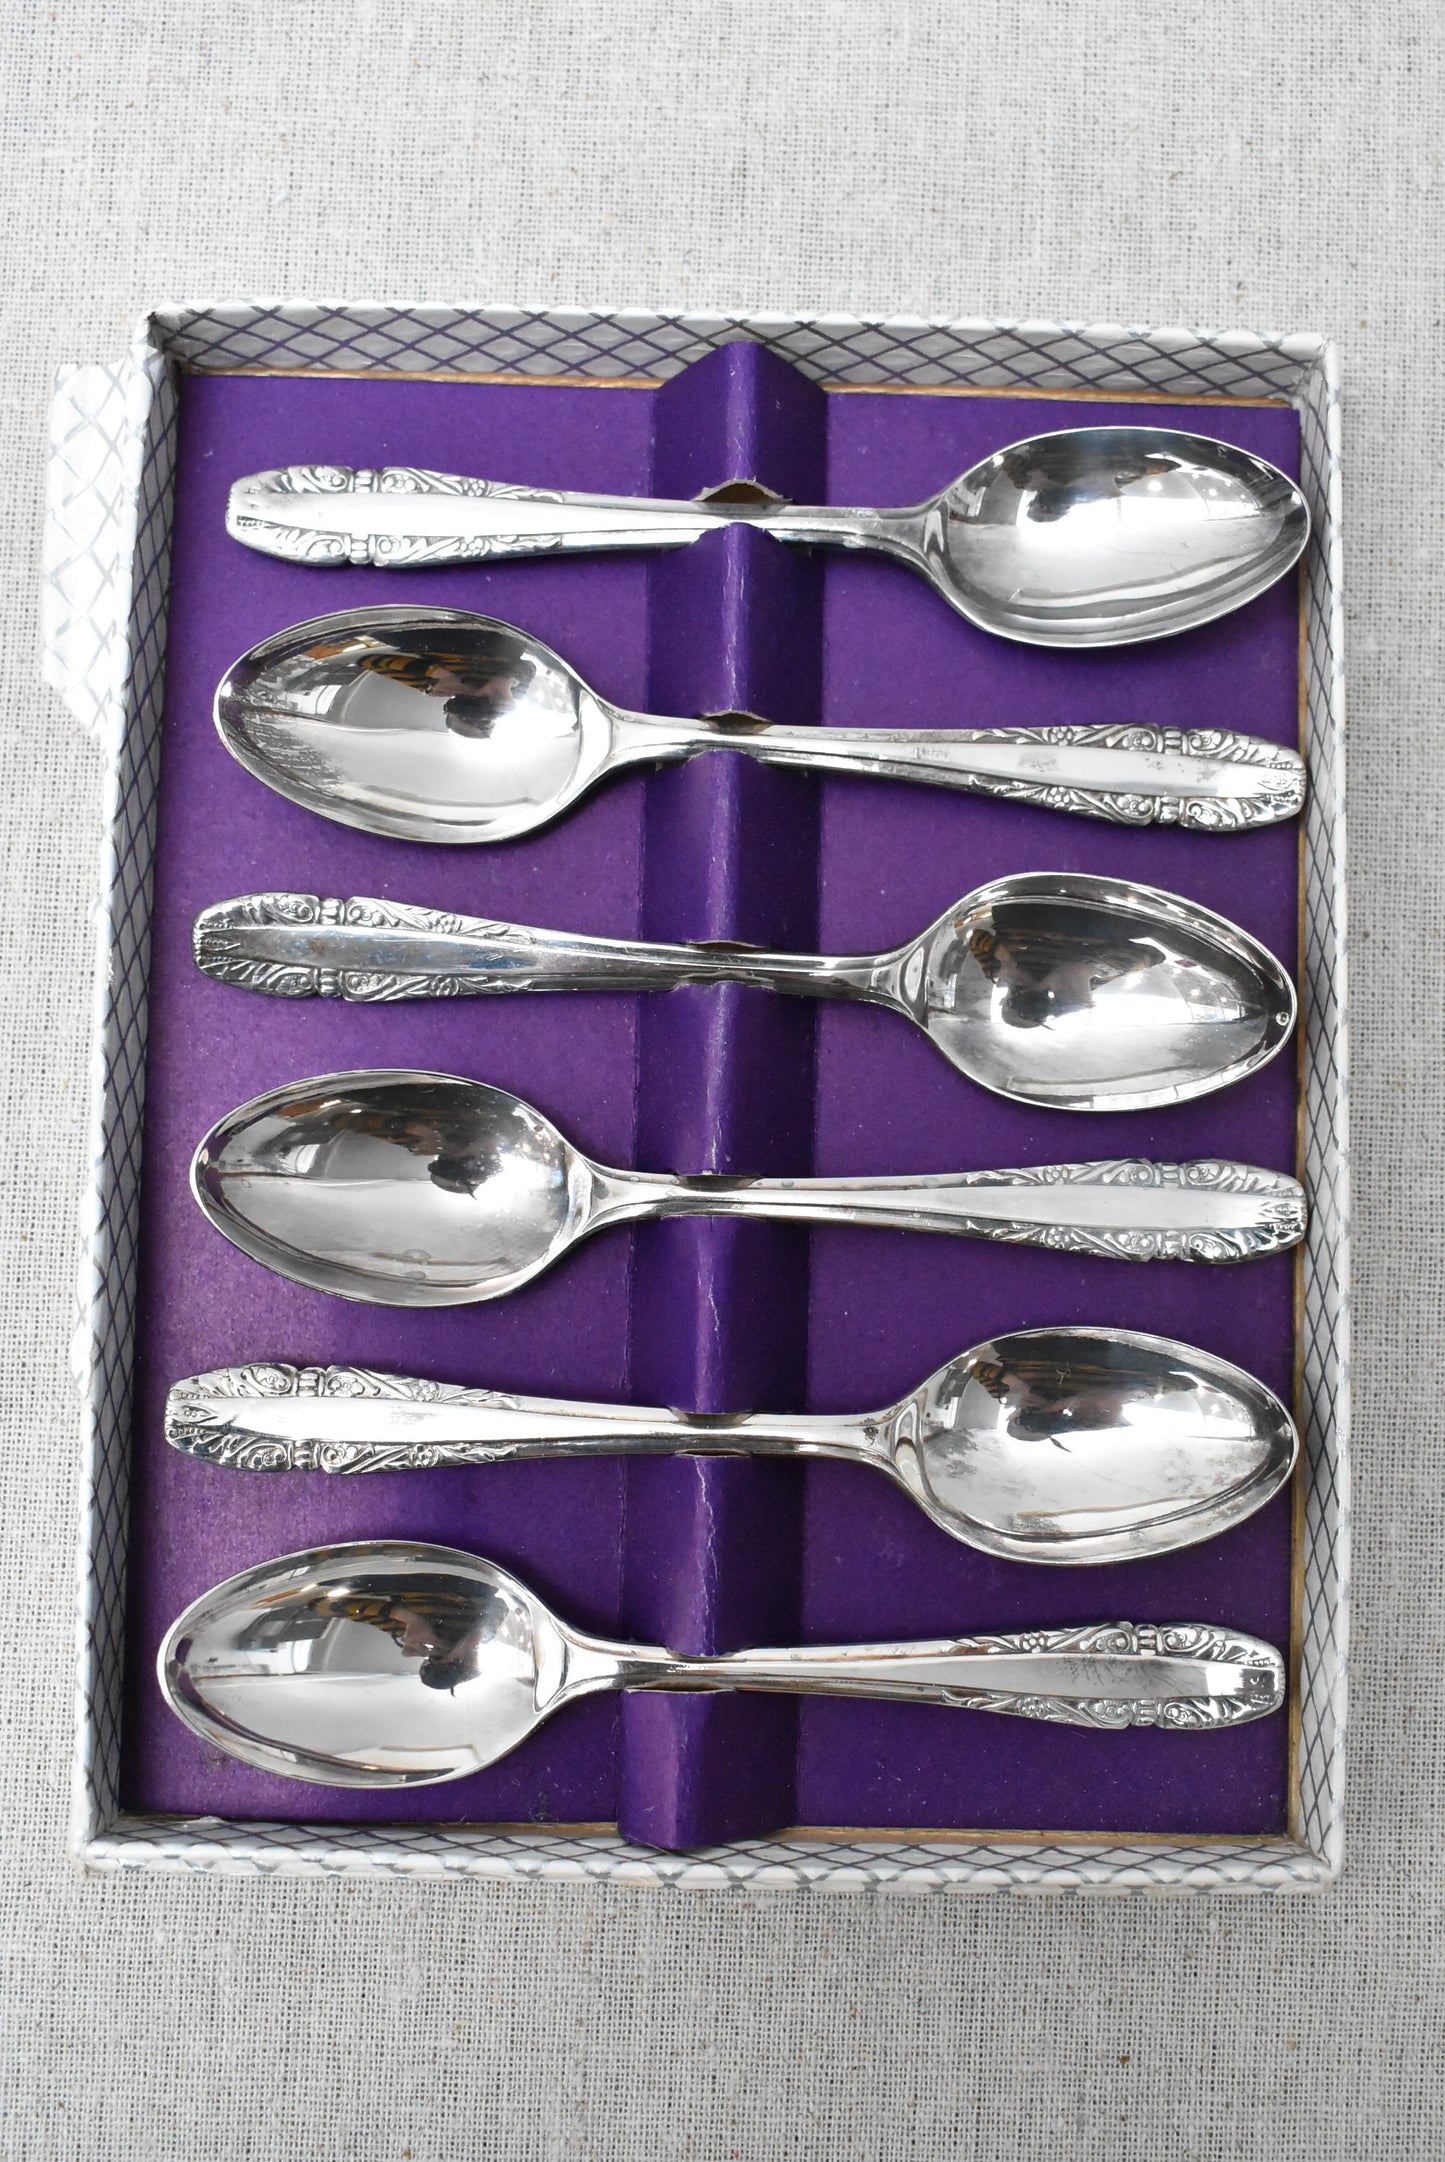 Grosvenor EPNS teaspoon set